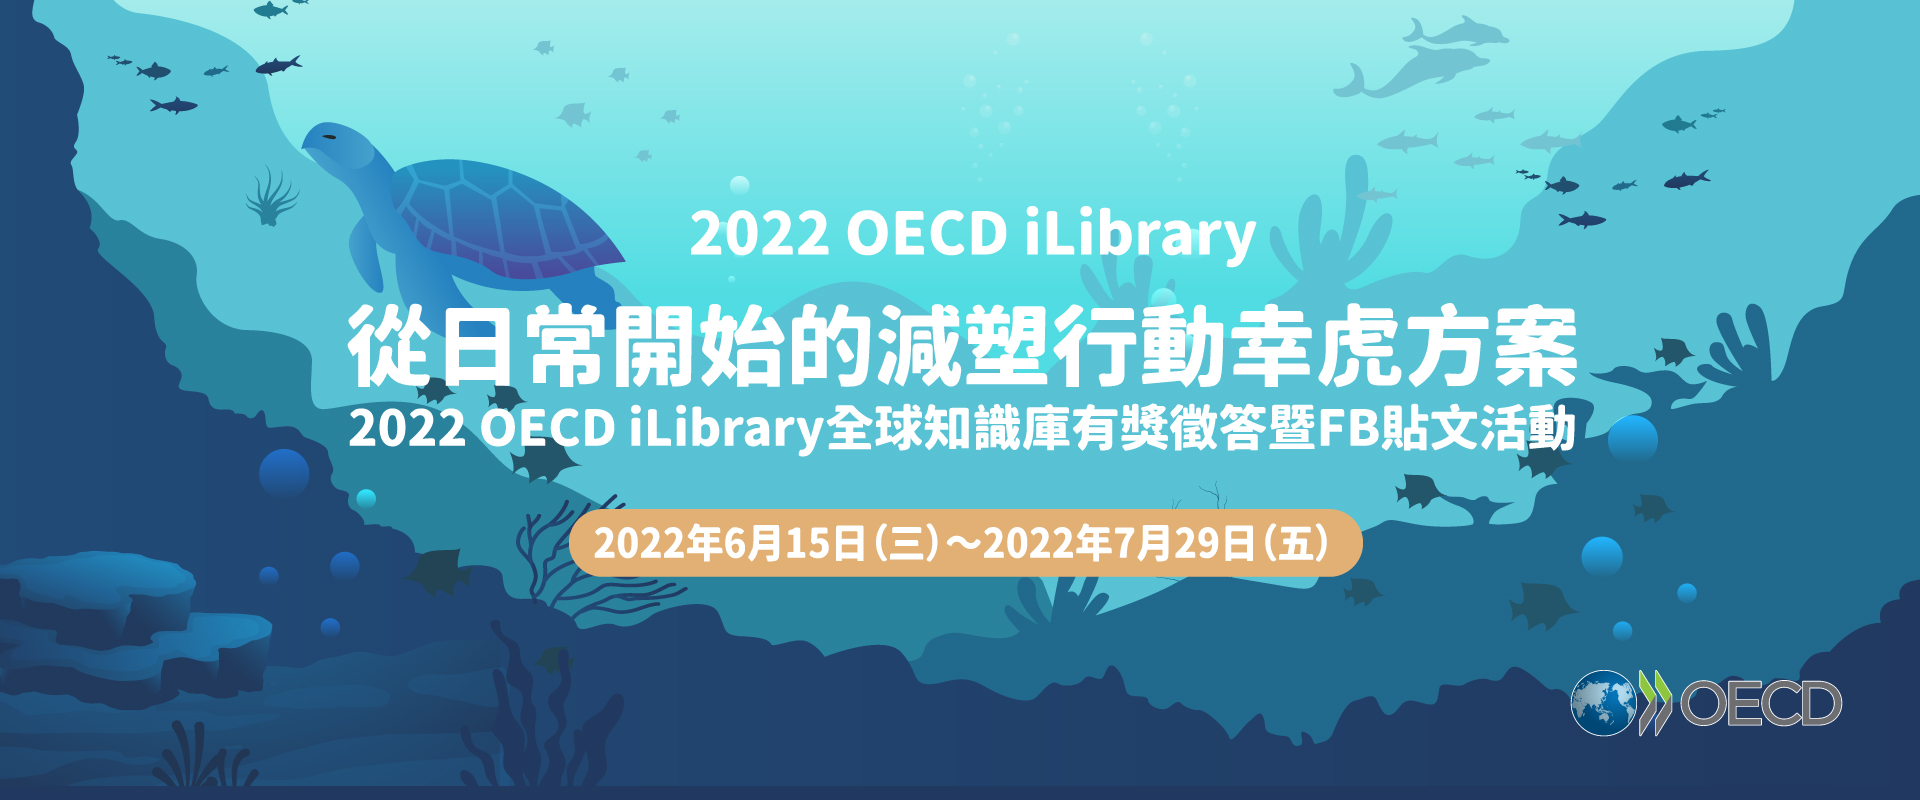 2022 OECD iLibrary全球知識庫有獎徵答暨FB貼文活動  ~從日常開始的減塑行動幸虎方案！！